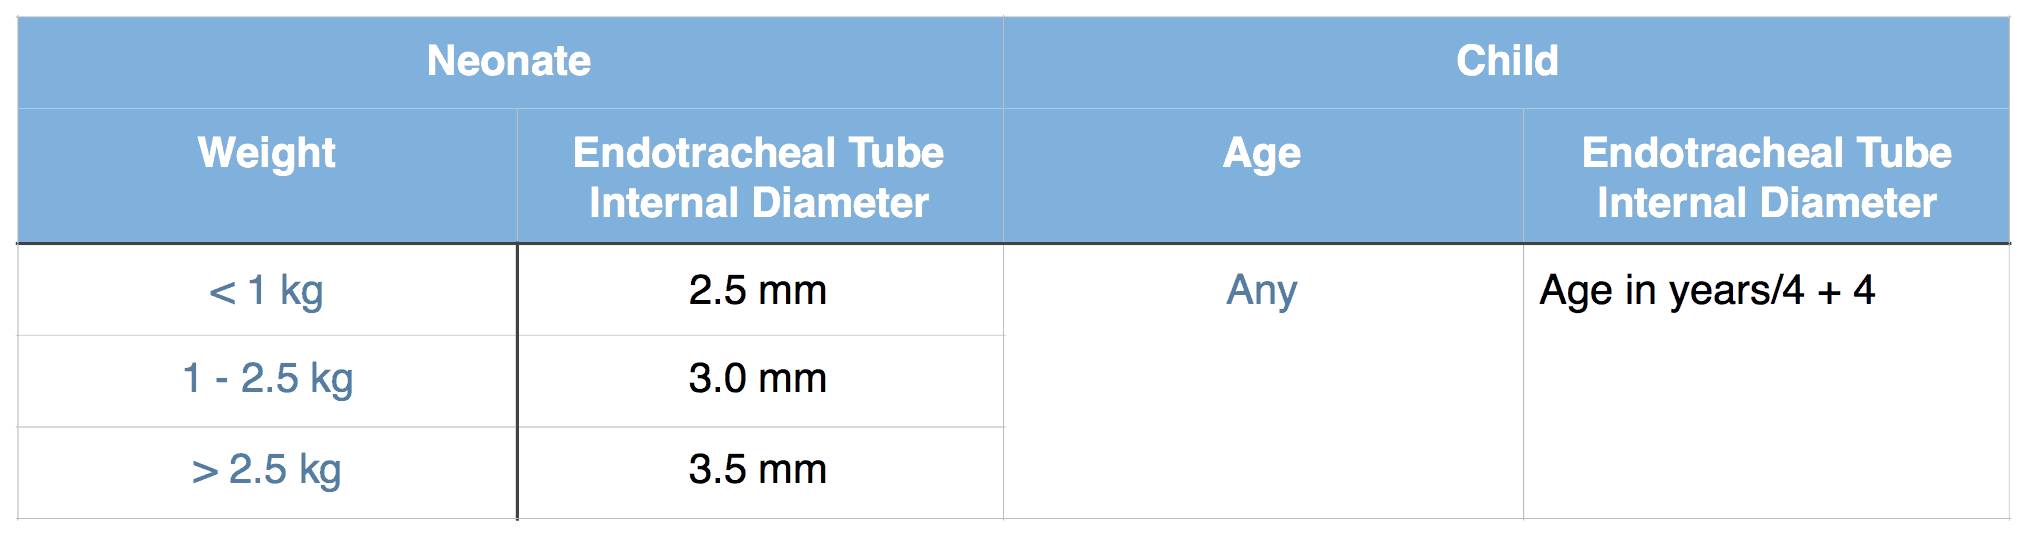 Et Tube Size Chart